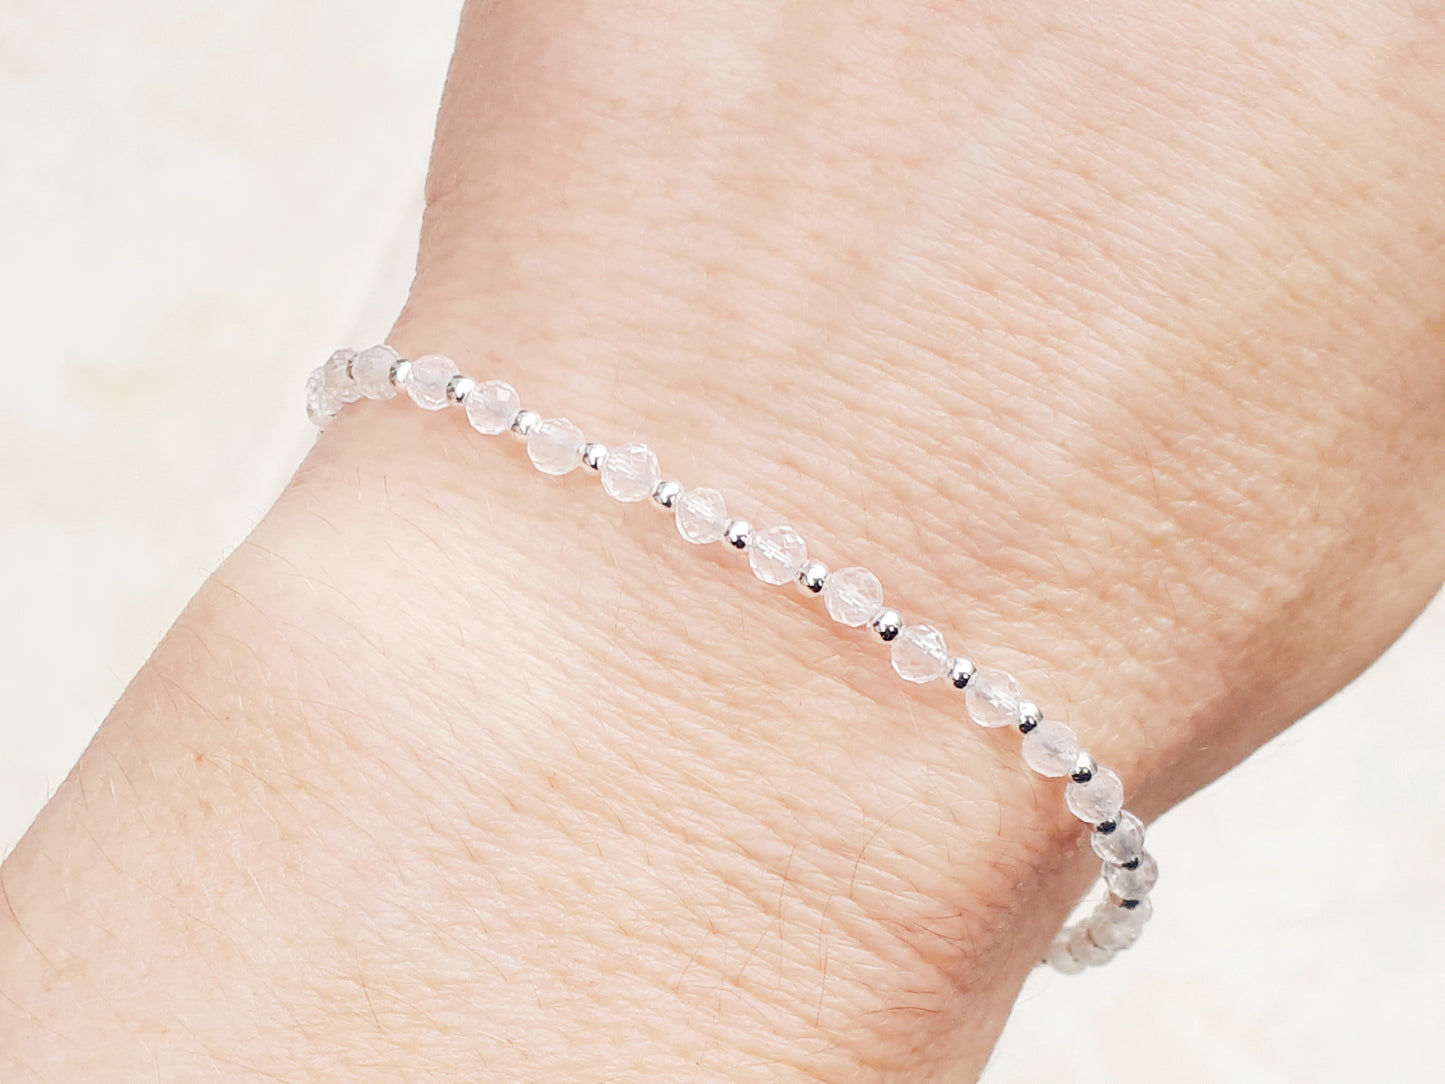 Personalised quartz bracelet in sterling silver.